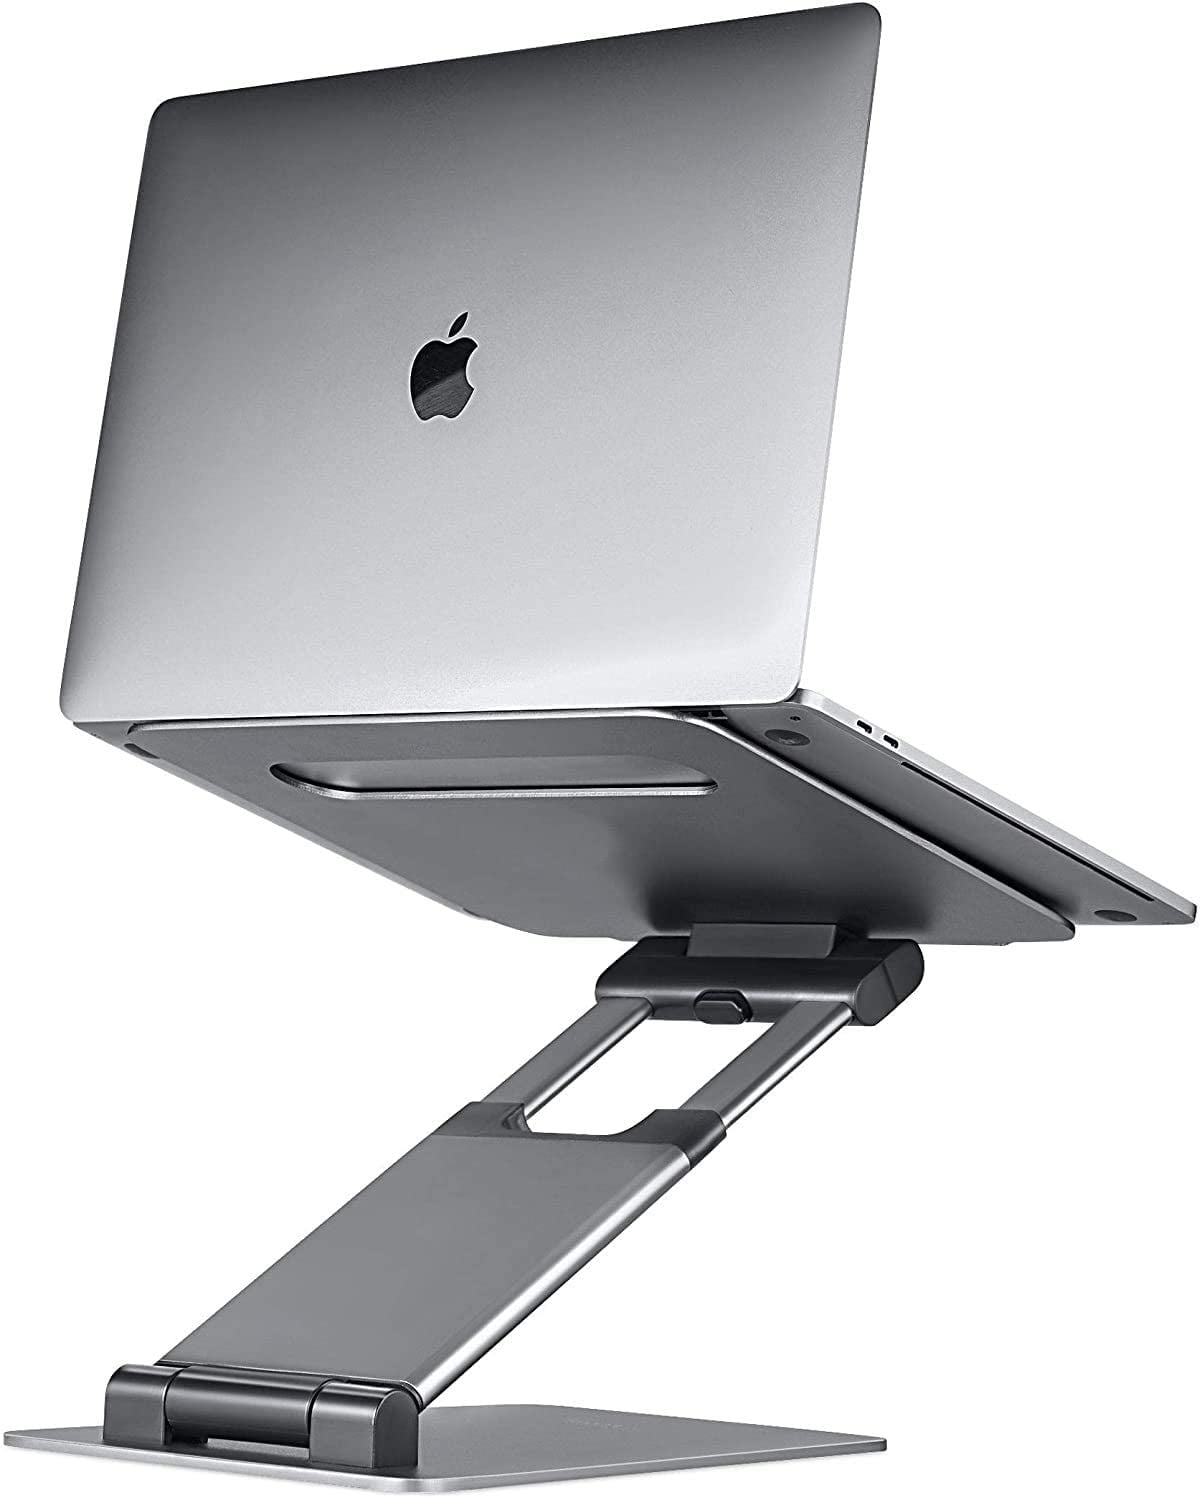 Ergonomic MacBook Pro stand